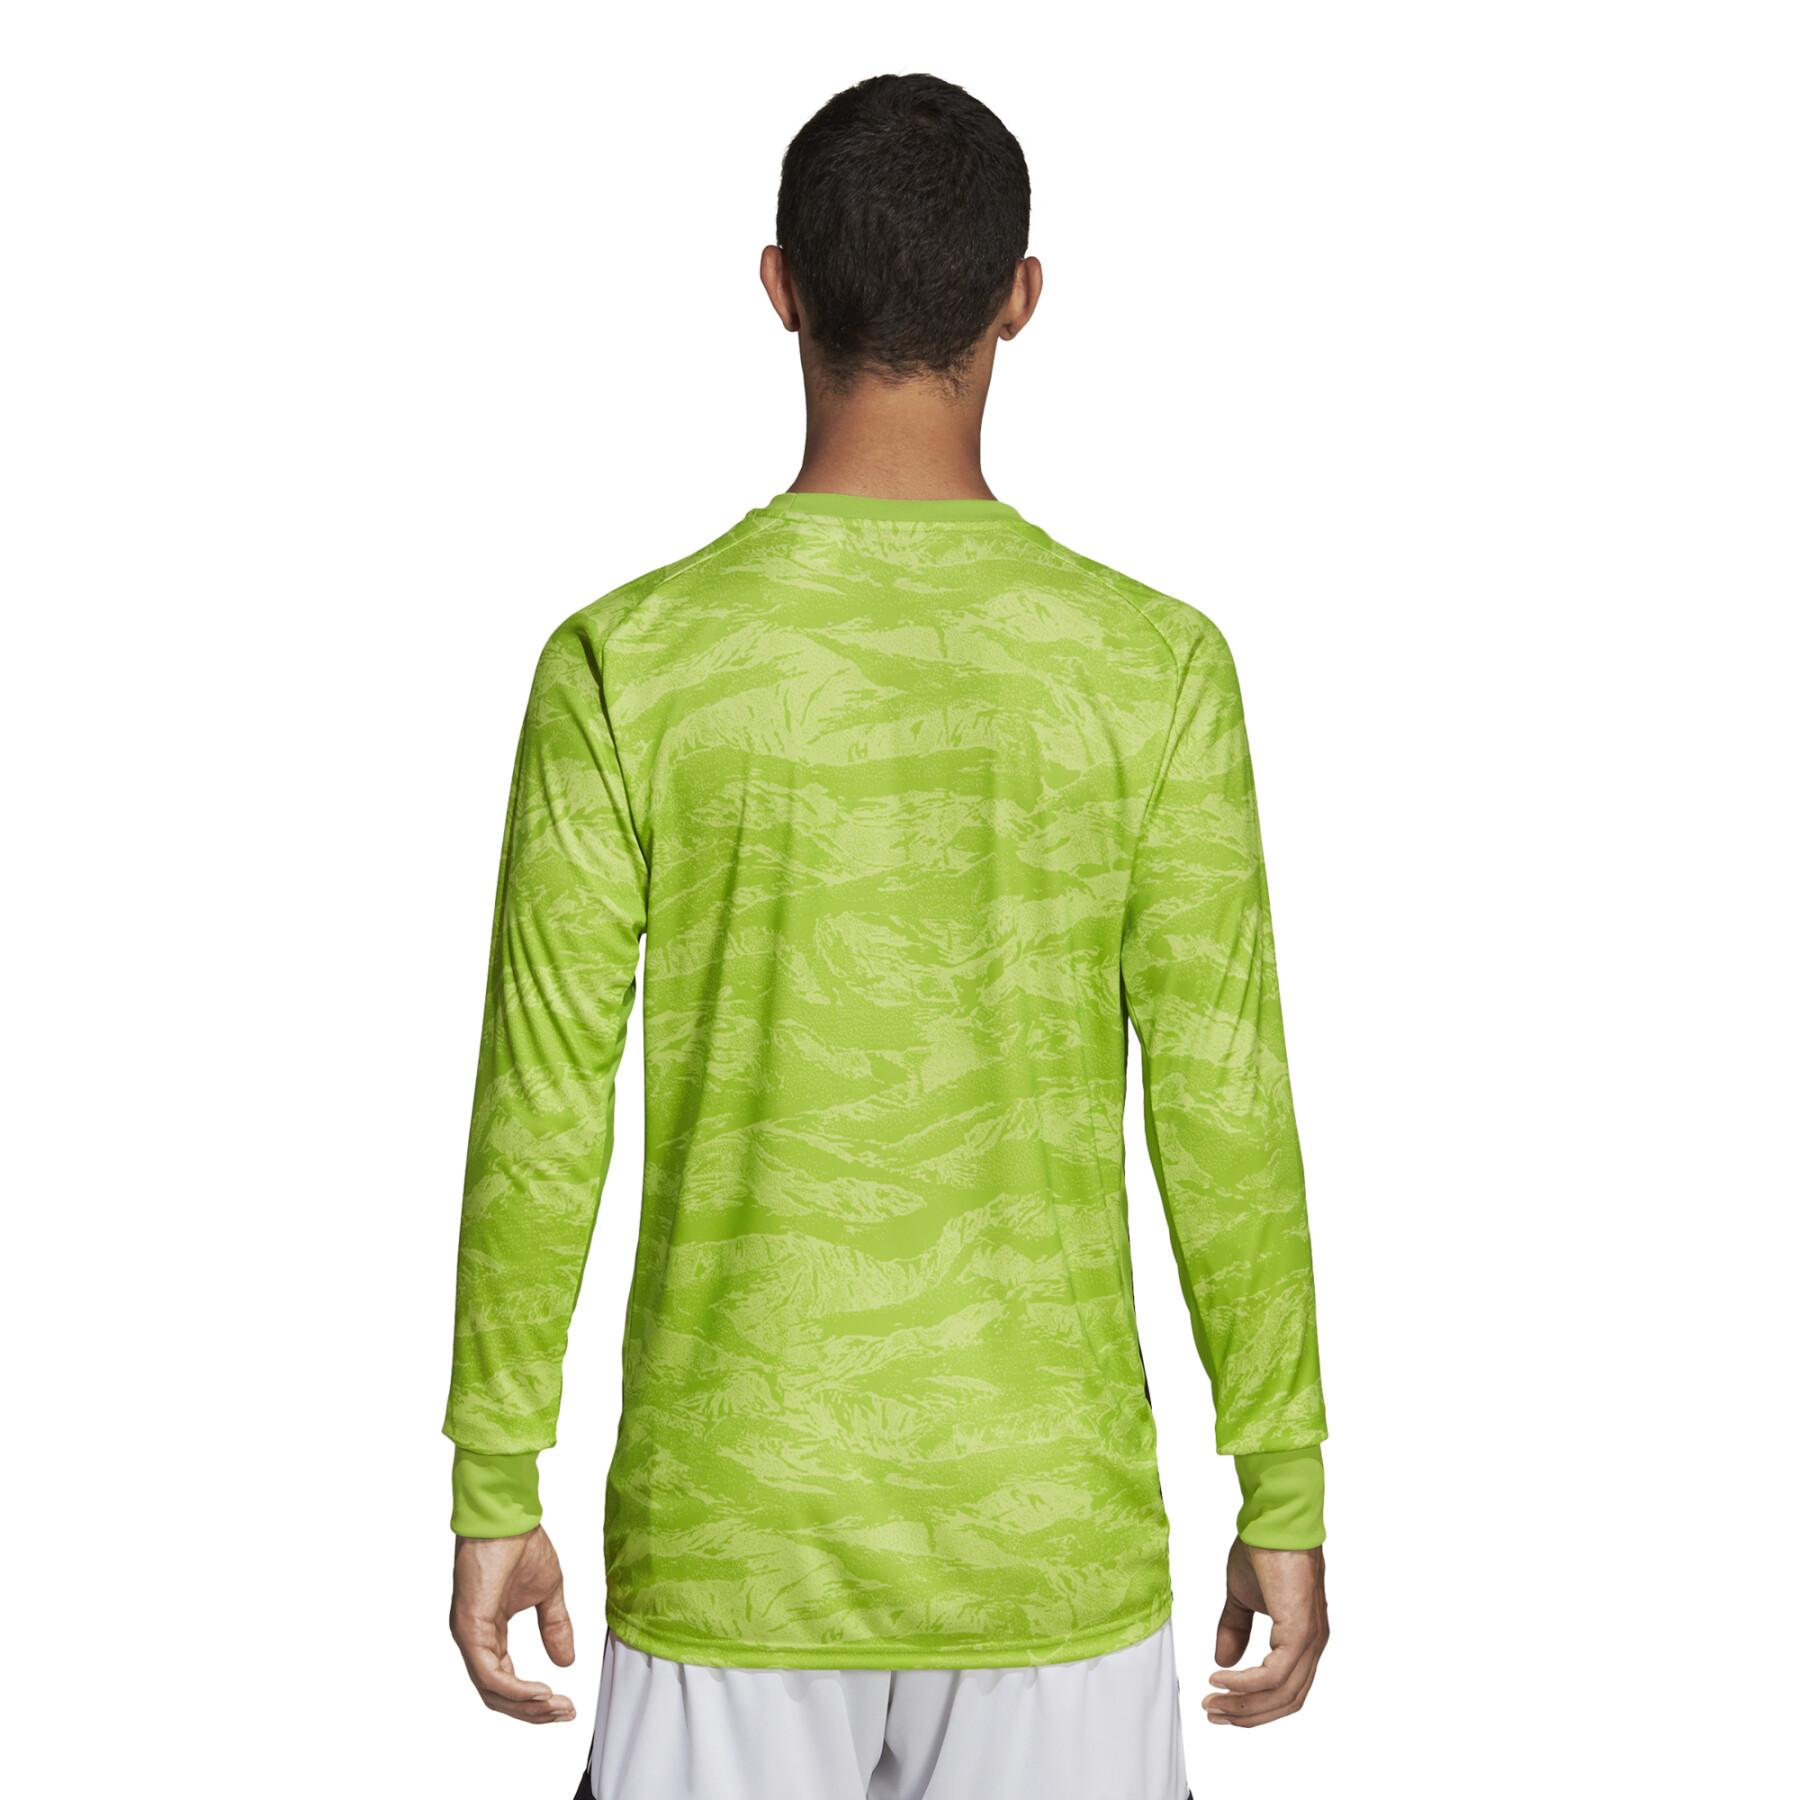 Goalkeeper jersey adidas AdiPro 18